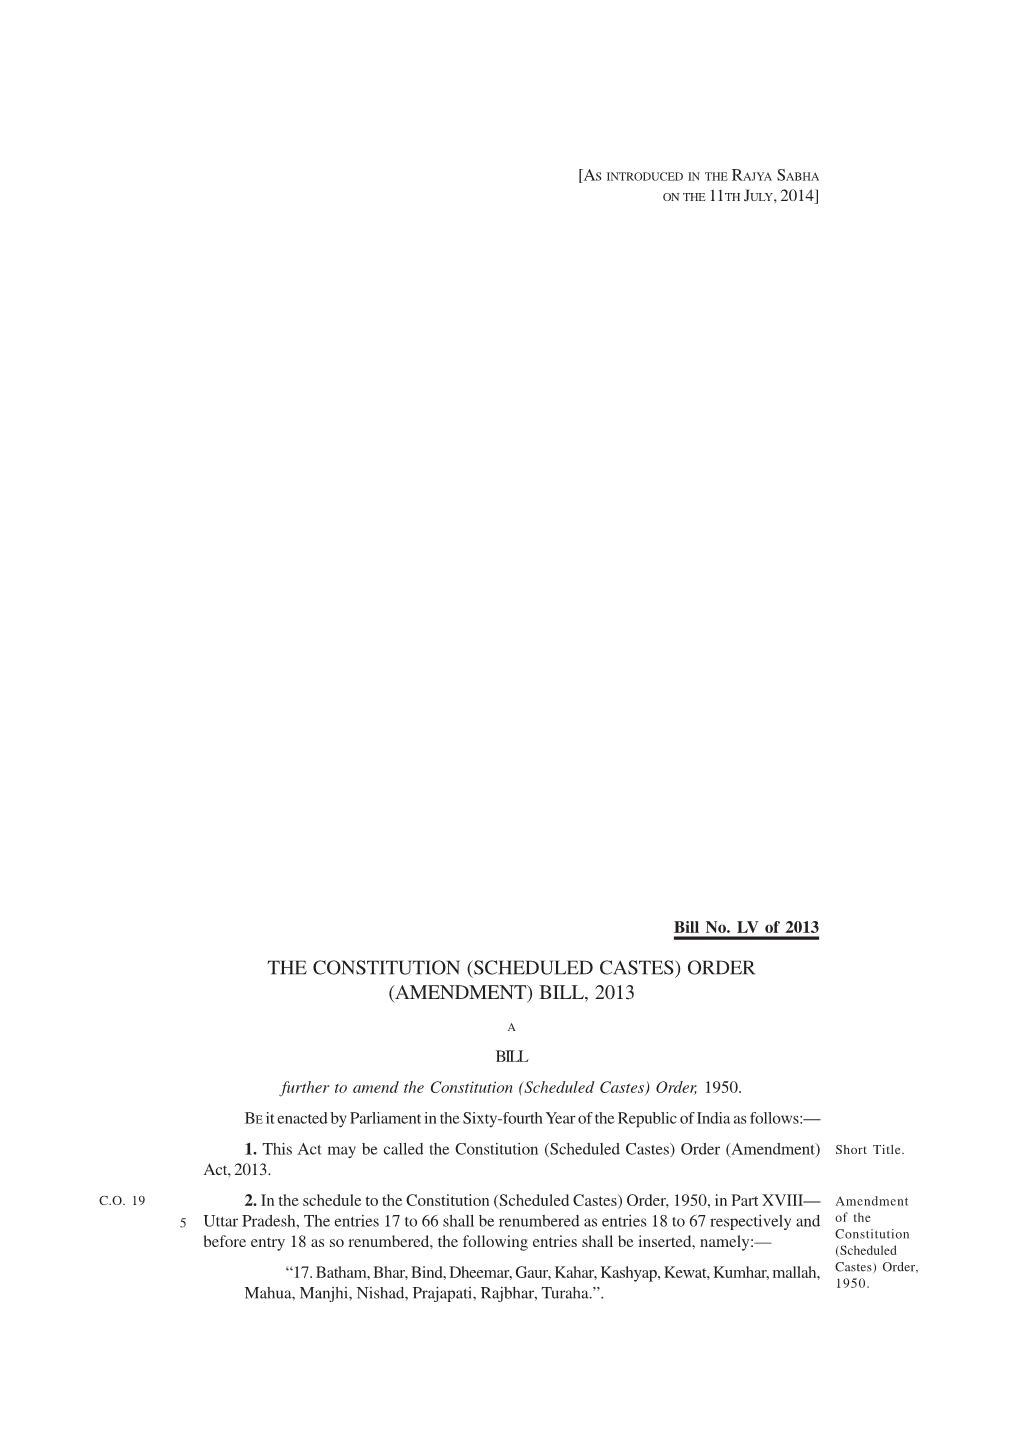 The Constitution (Scheduled Castes) Order (Amendment) Bill, 2013